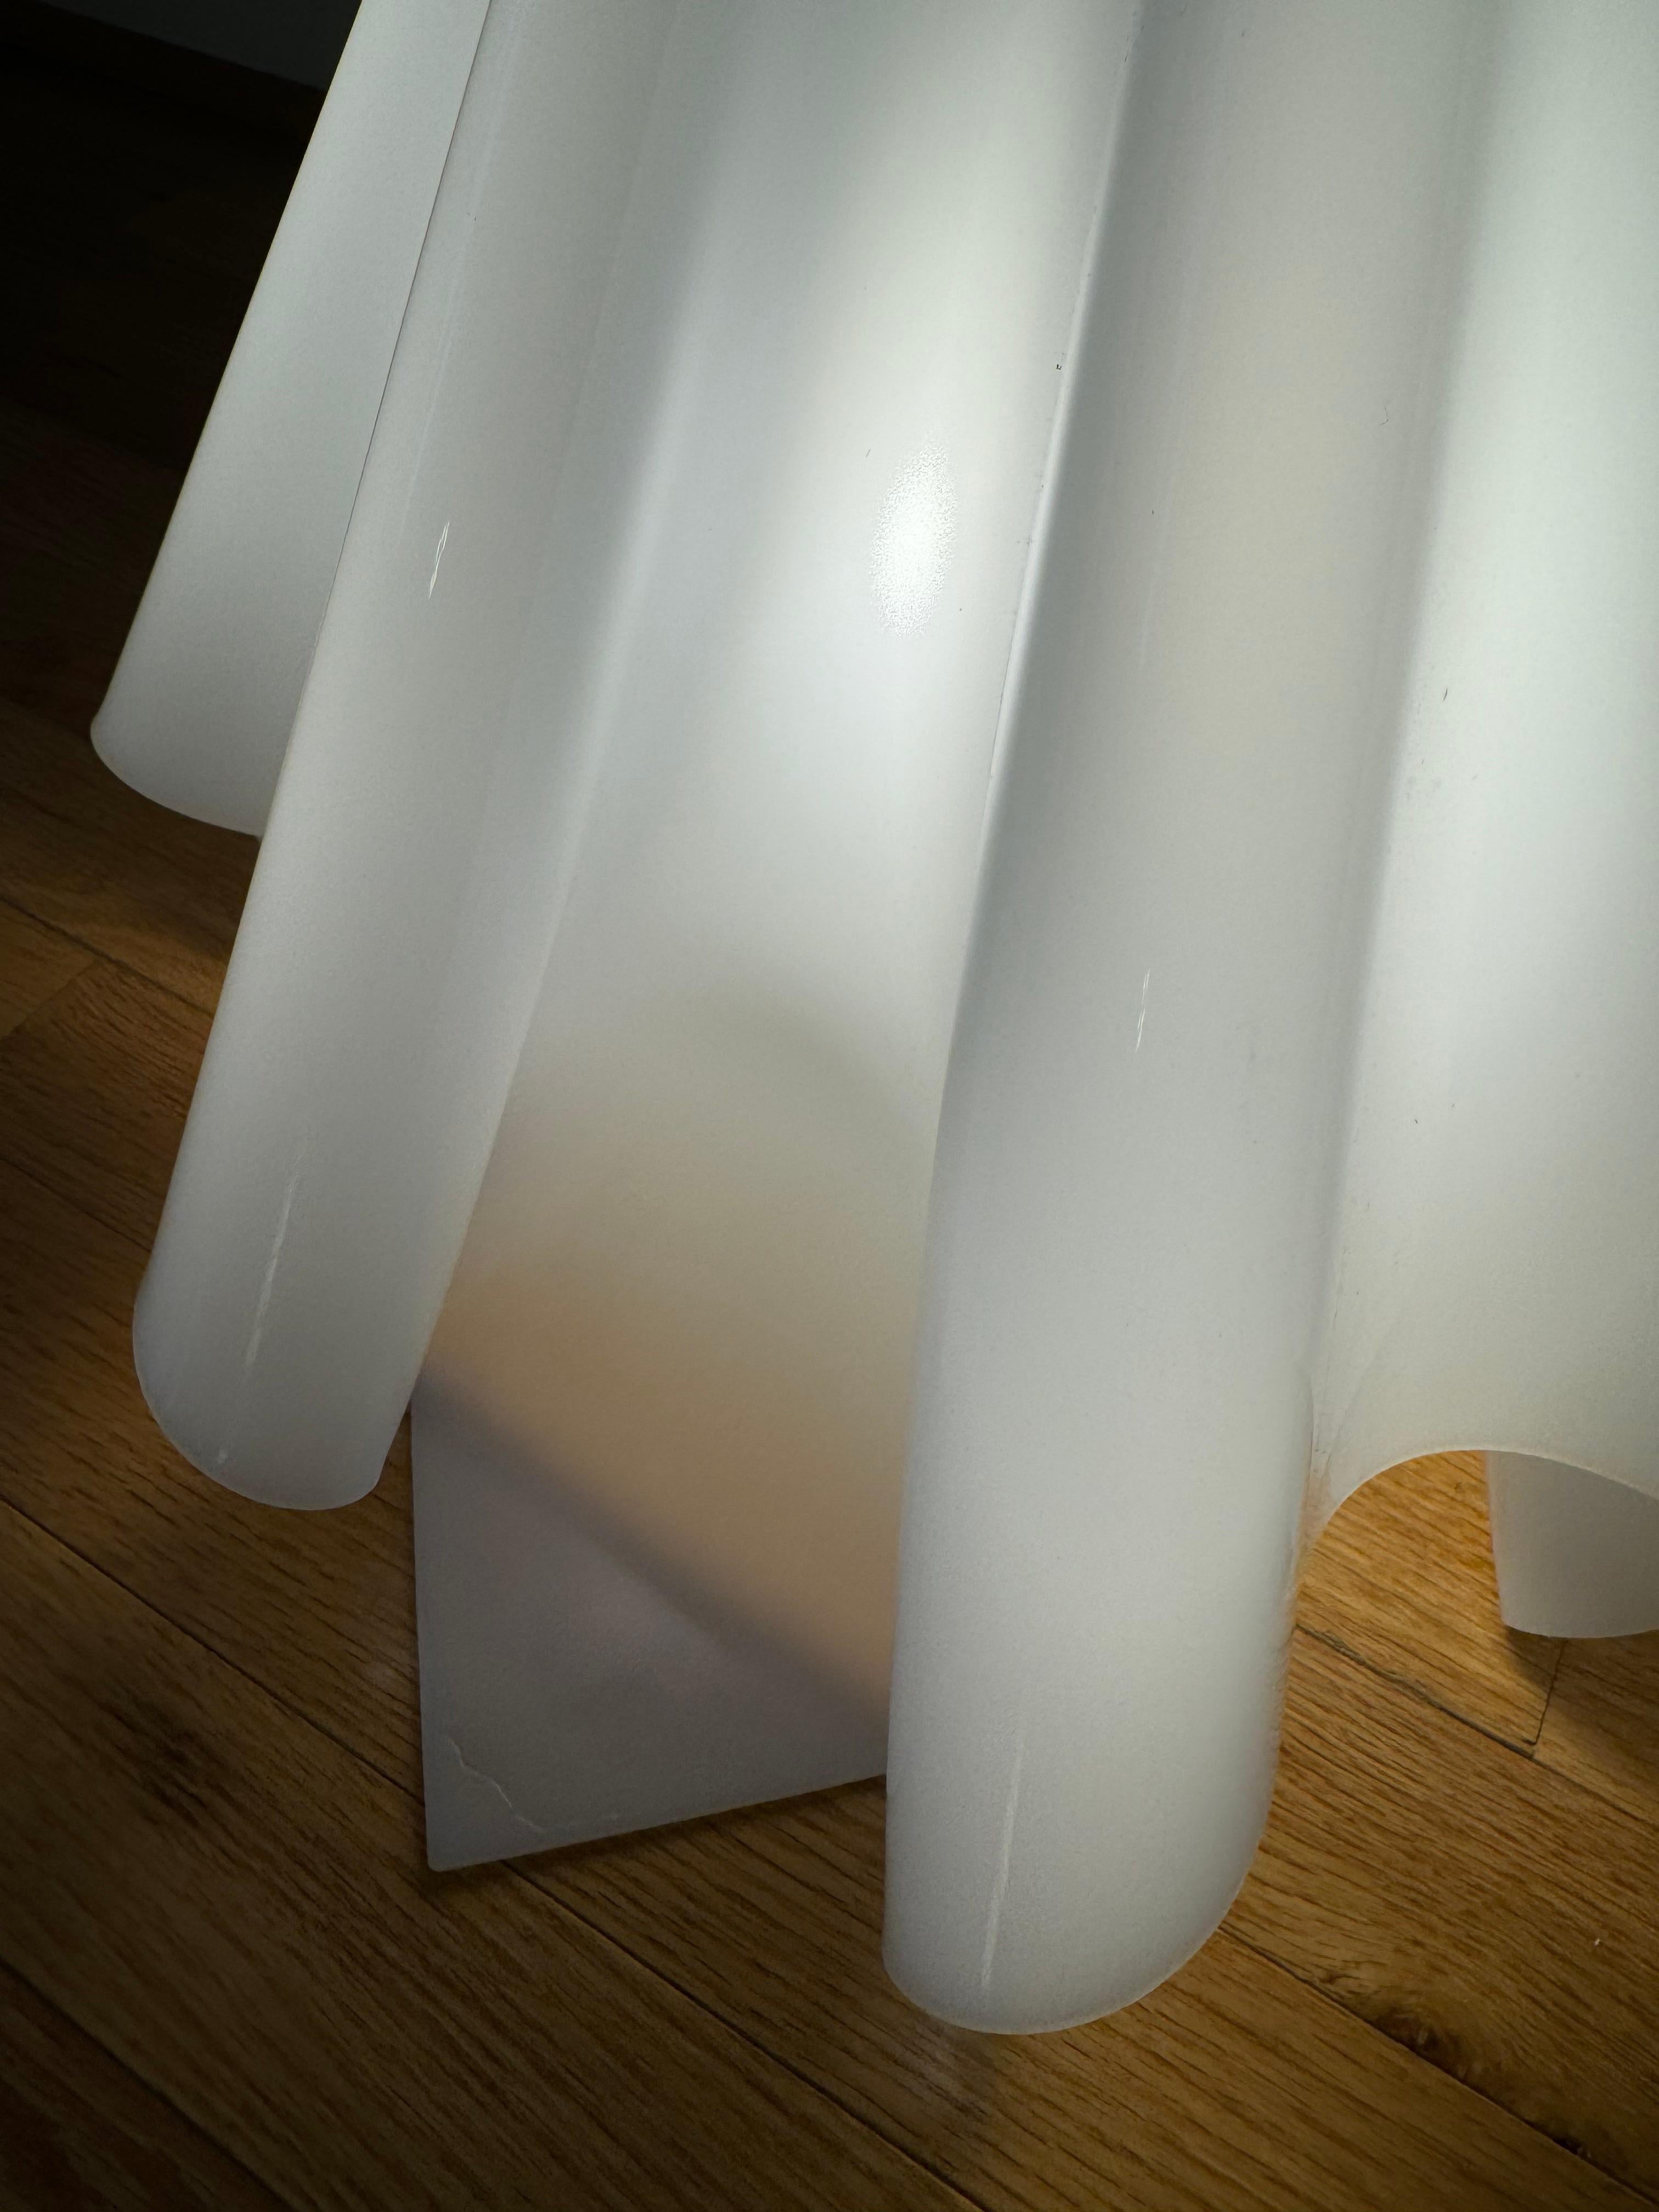 Rare early K-series (Oba- Q/Ghost) table lamp by Shiro Kuramata (Medium size) 2